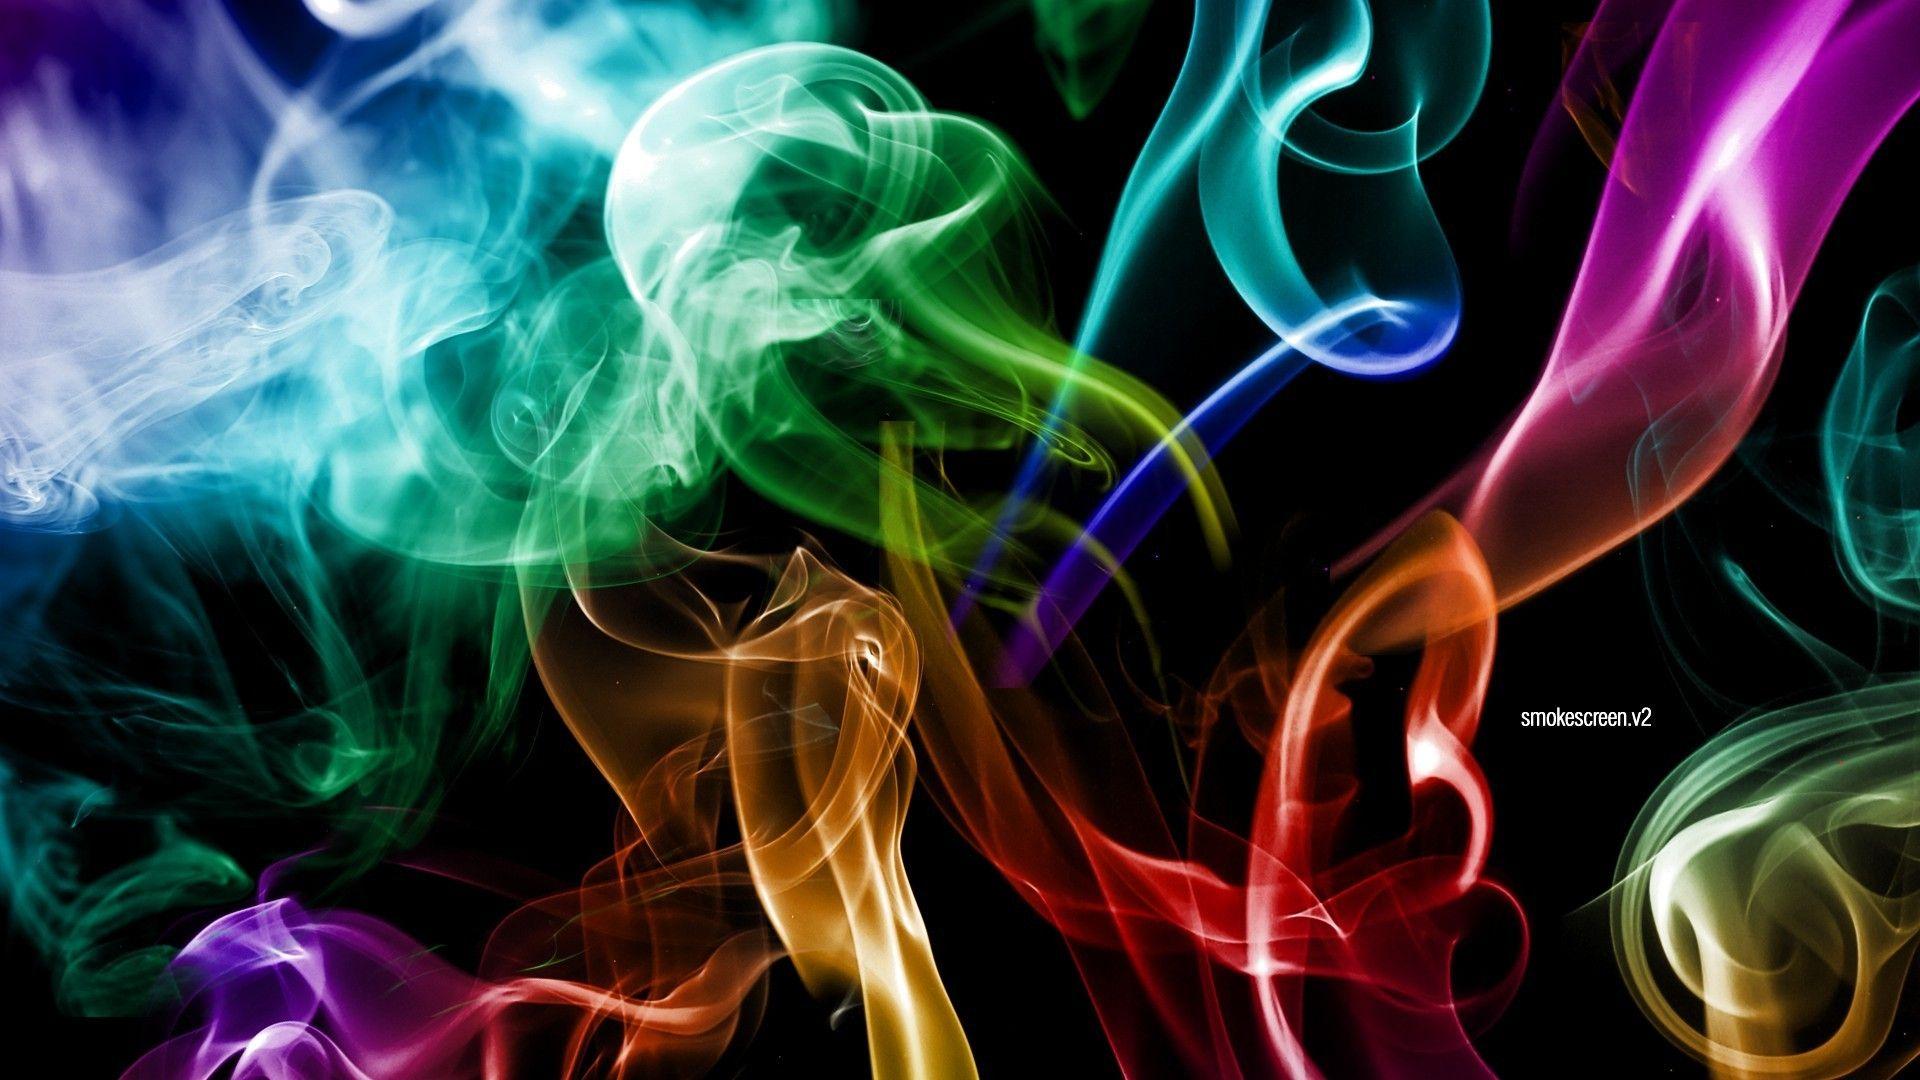 Smoke imagine colors wallpaper. PC